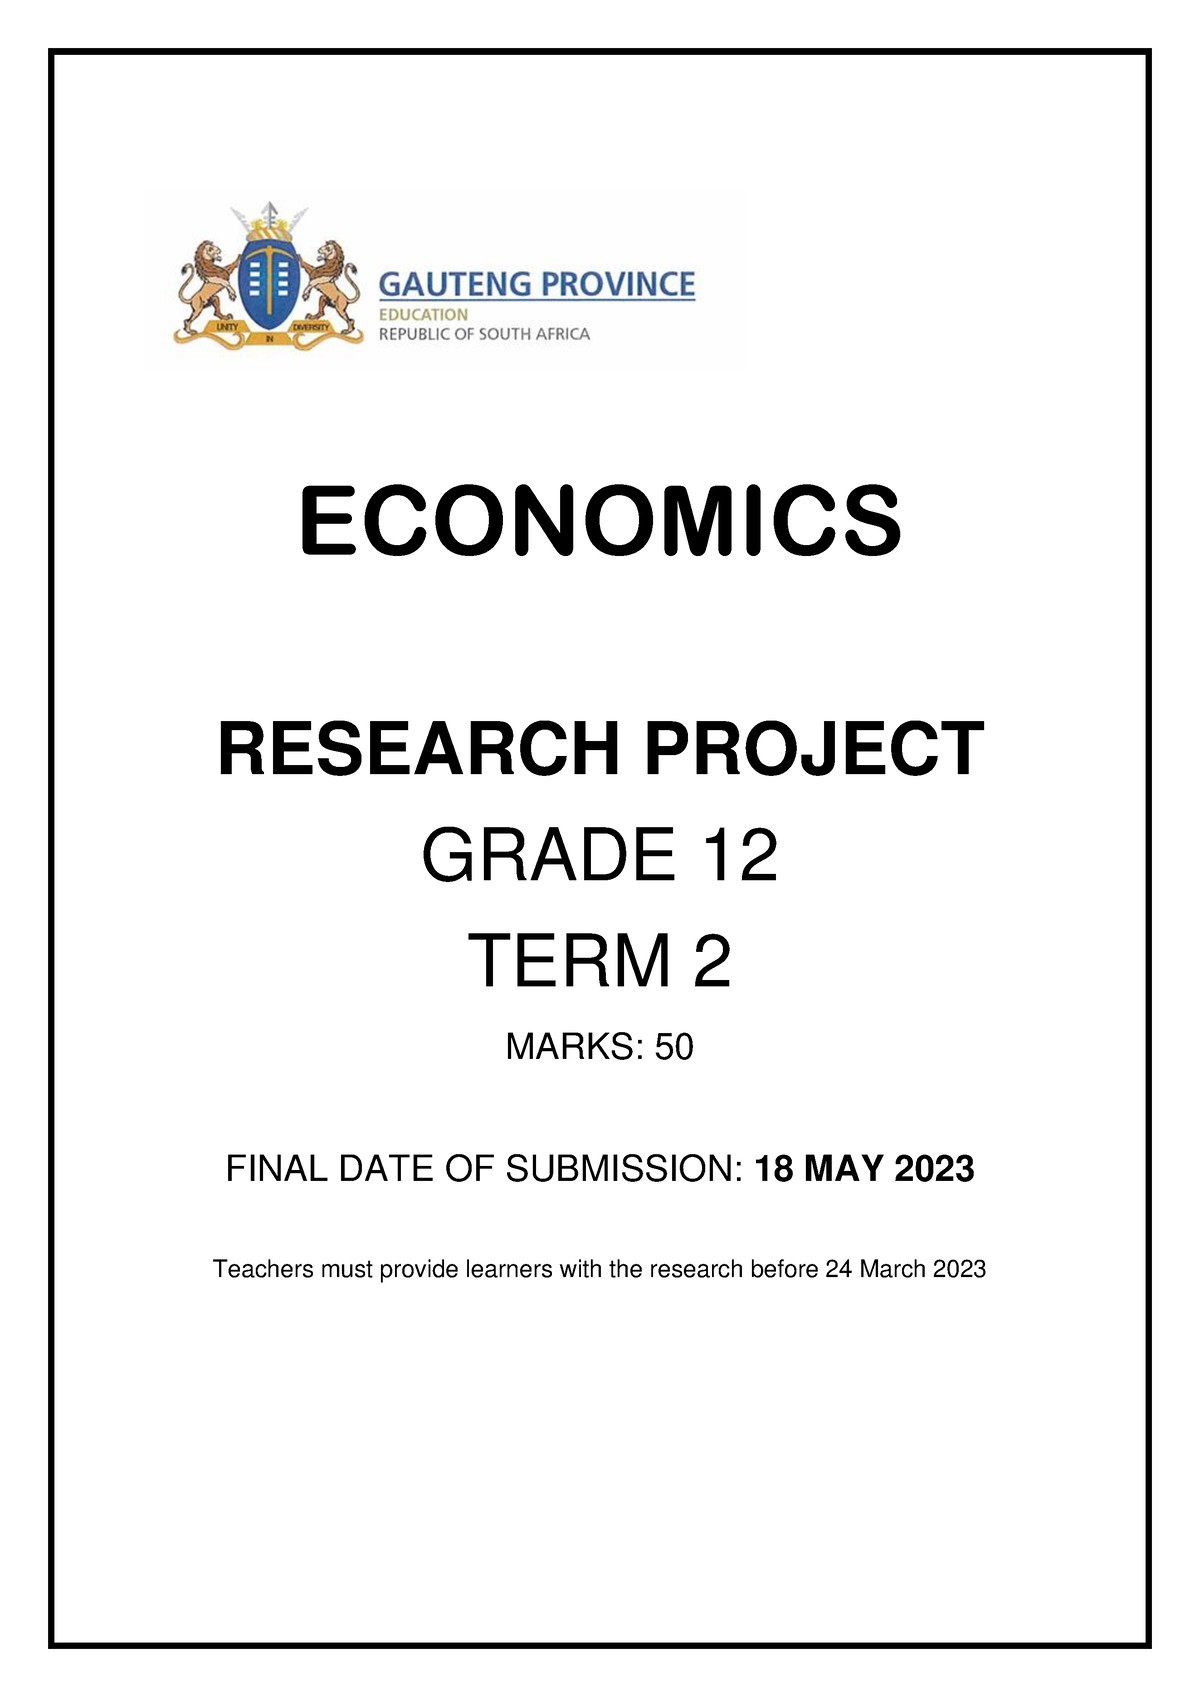 economics research project 2023 grade 12